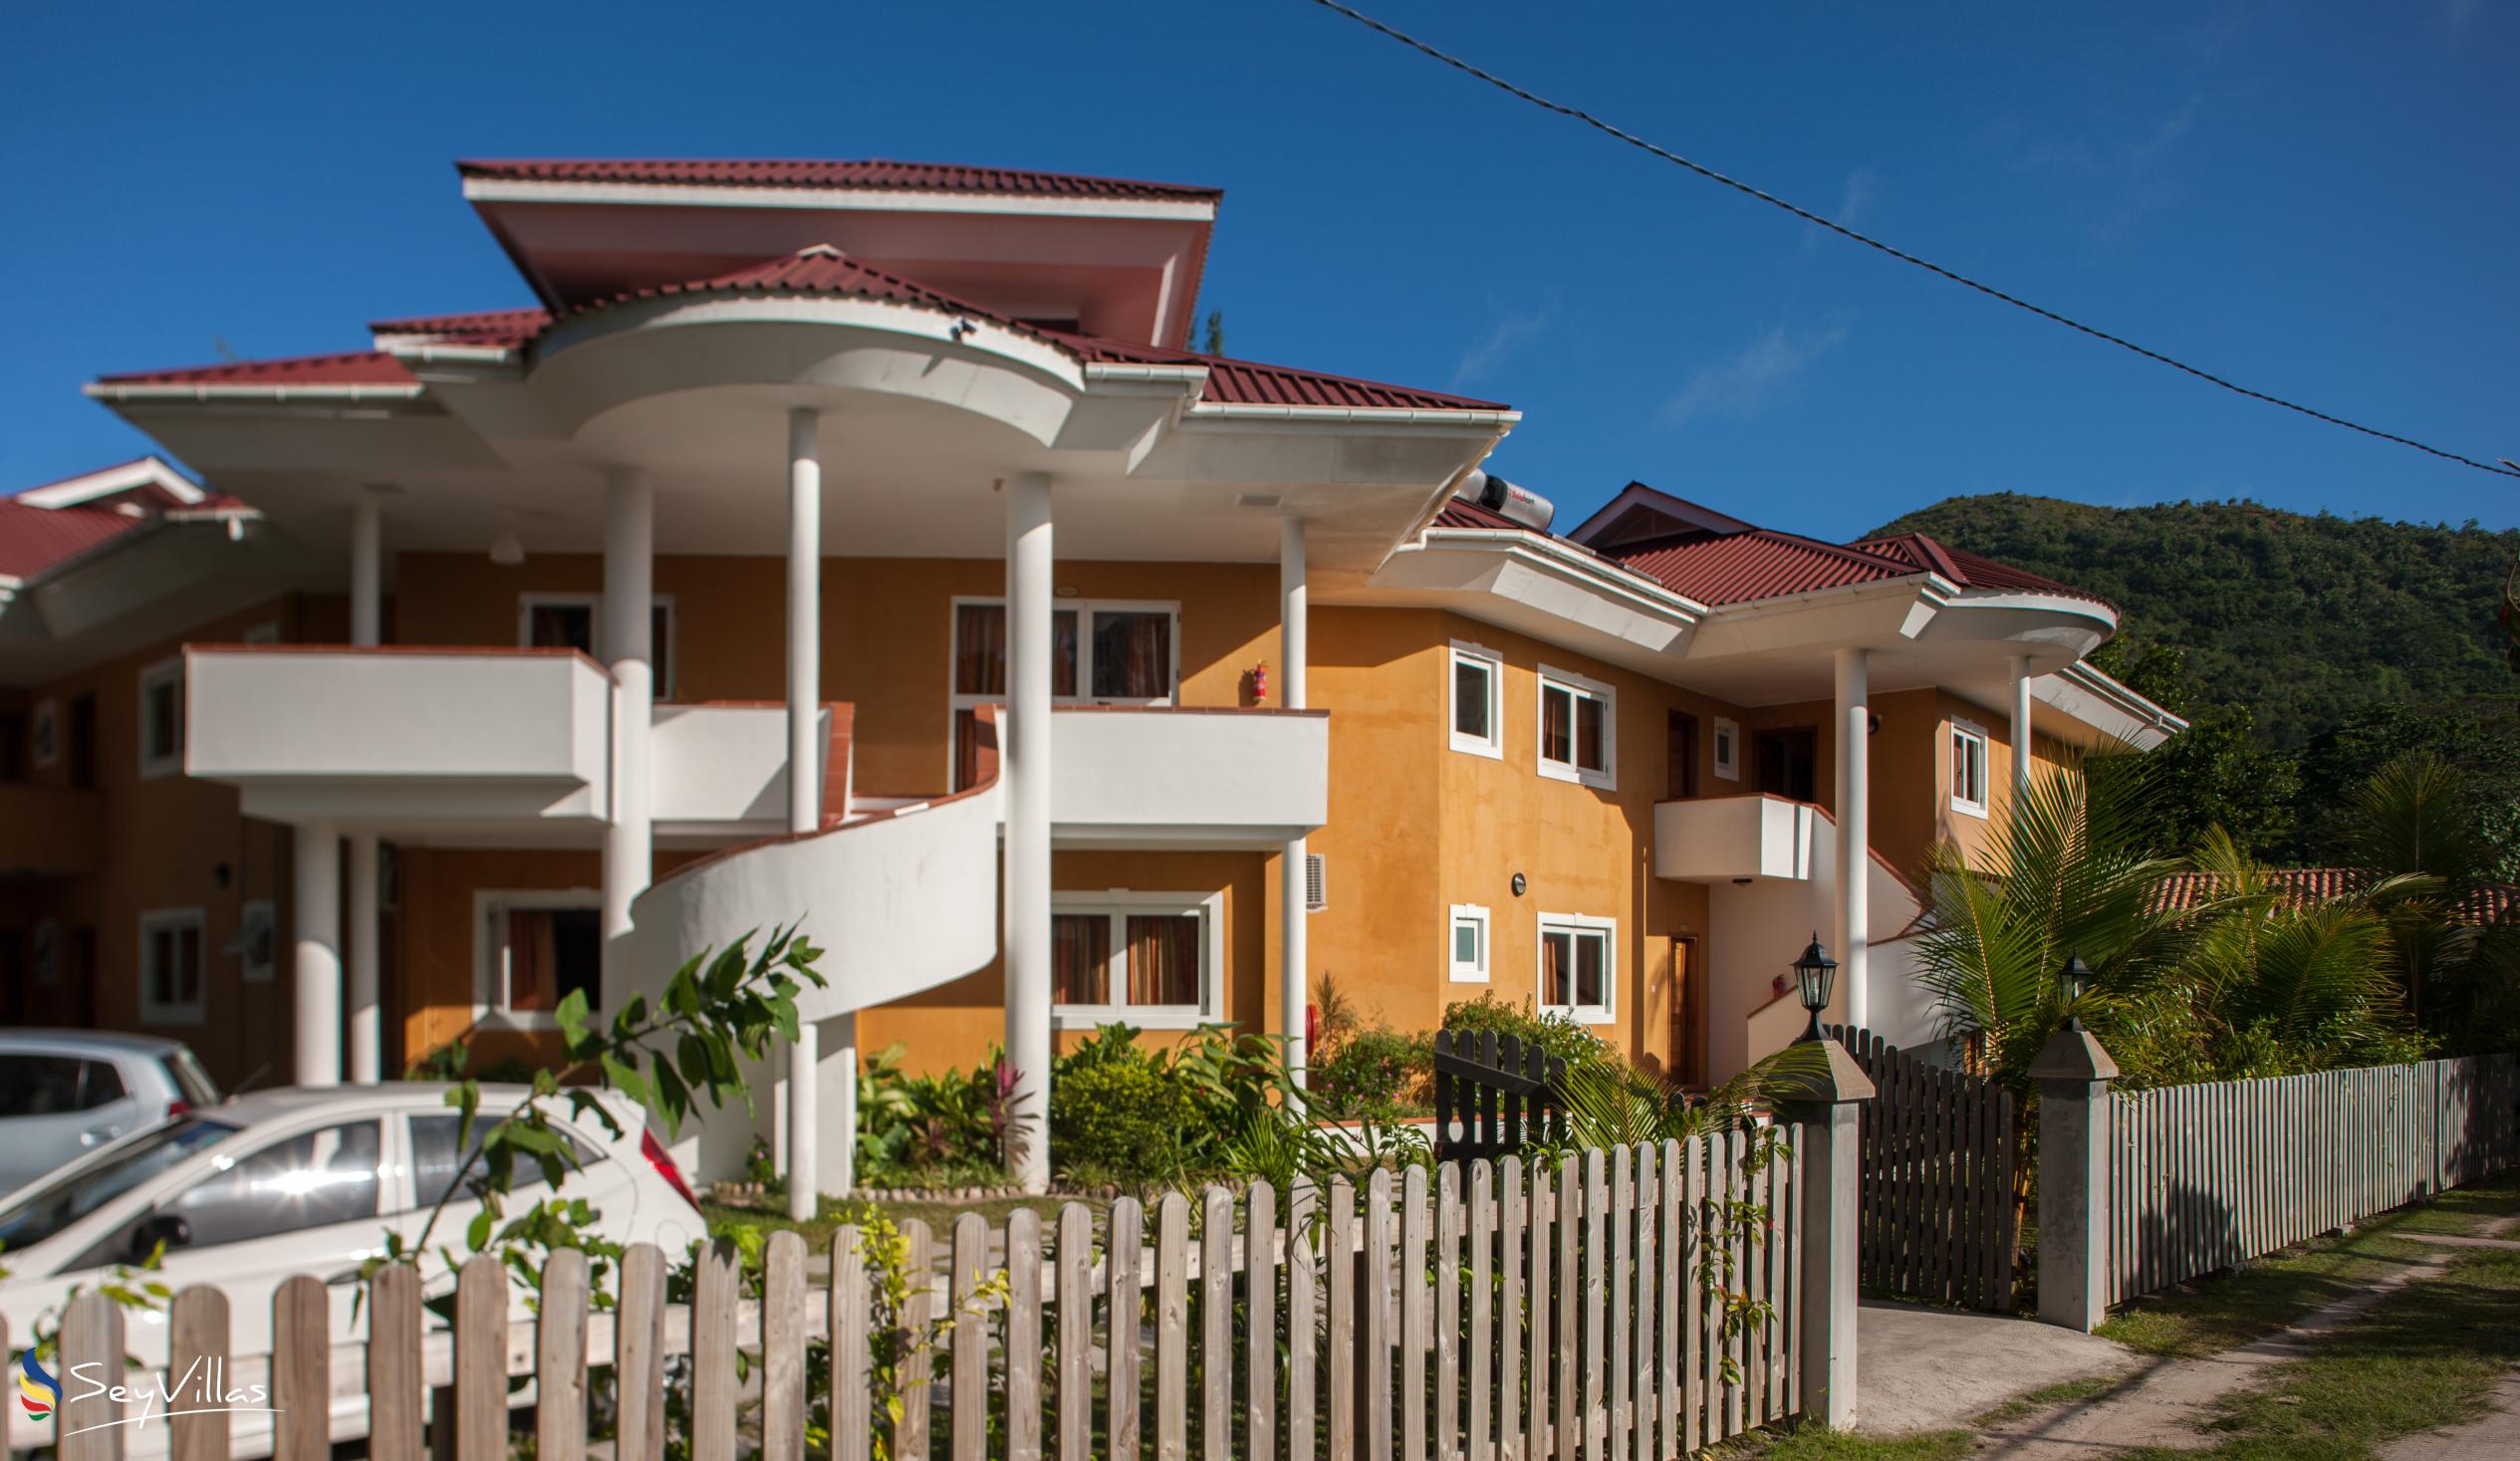 Photo 5: Cote d'Or Apartments - Outdoor area - Praslin (Seychelles)